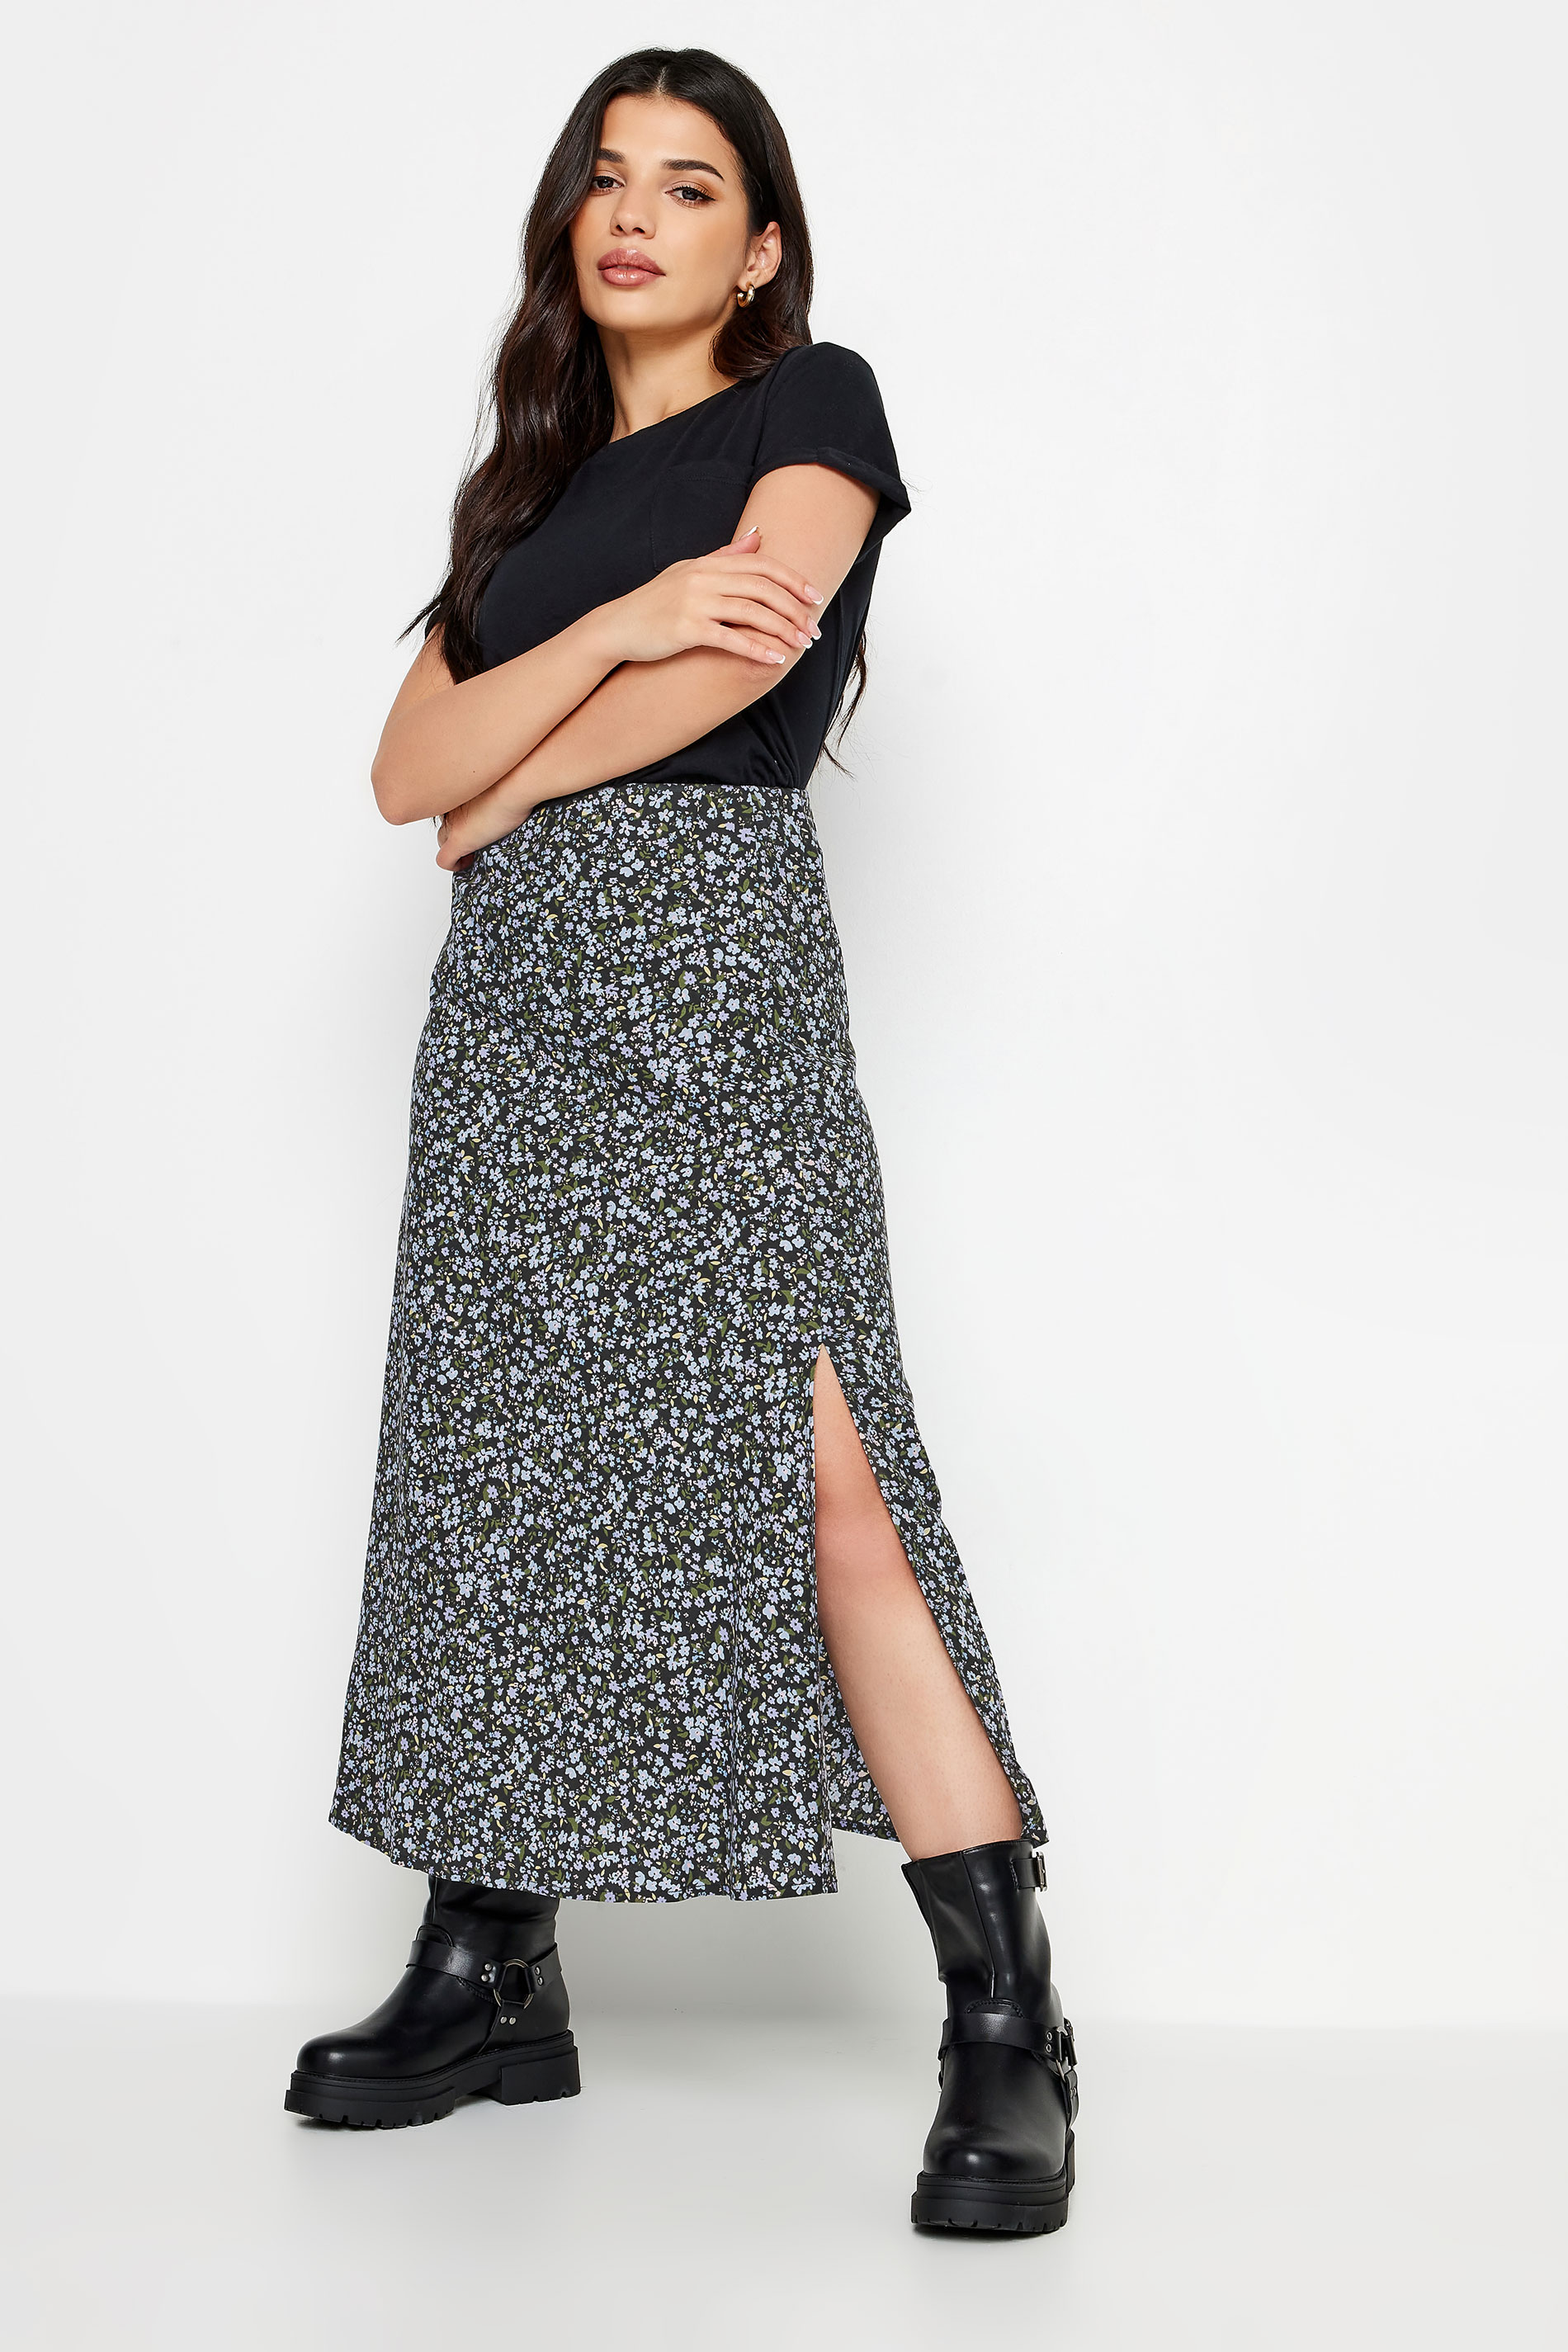 PixieGirl Petite Womens Black & Blue Floral Print Midaxi Skirt | PixieGirl 1